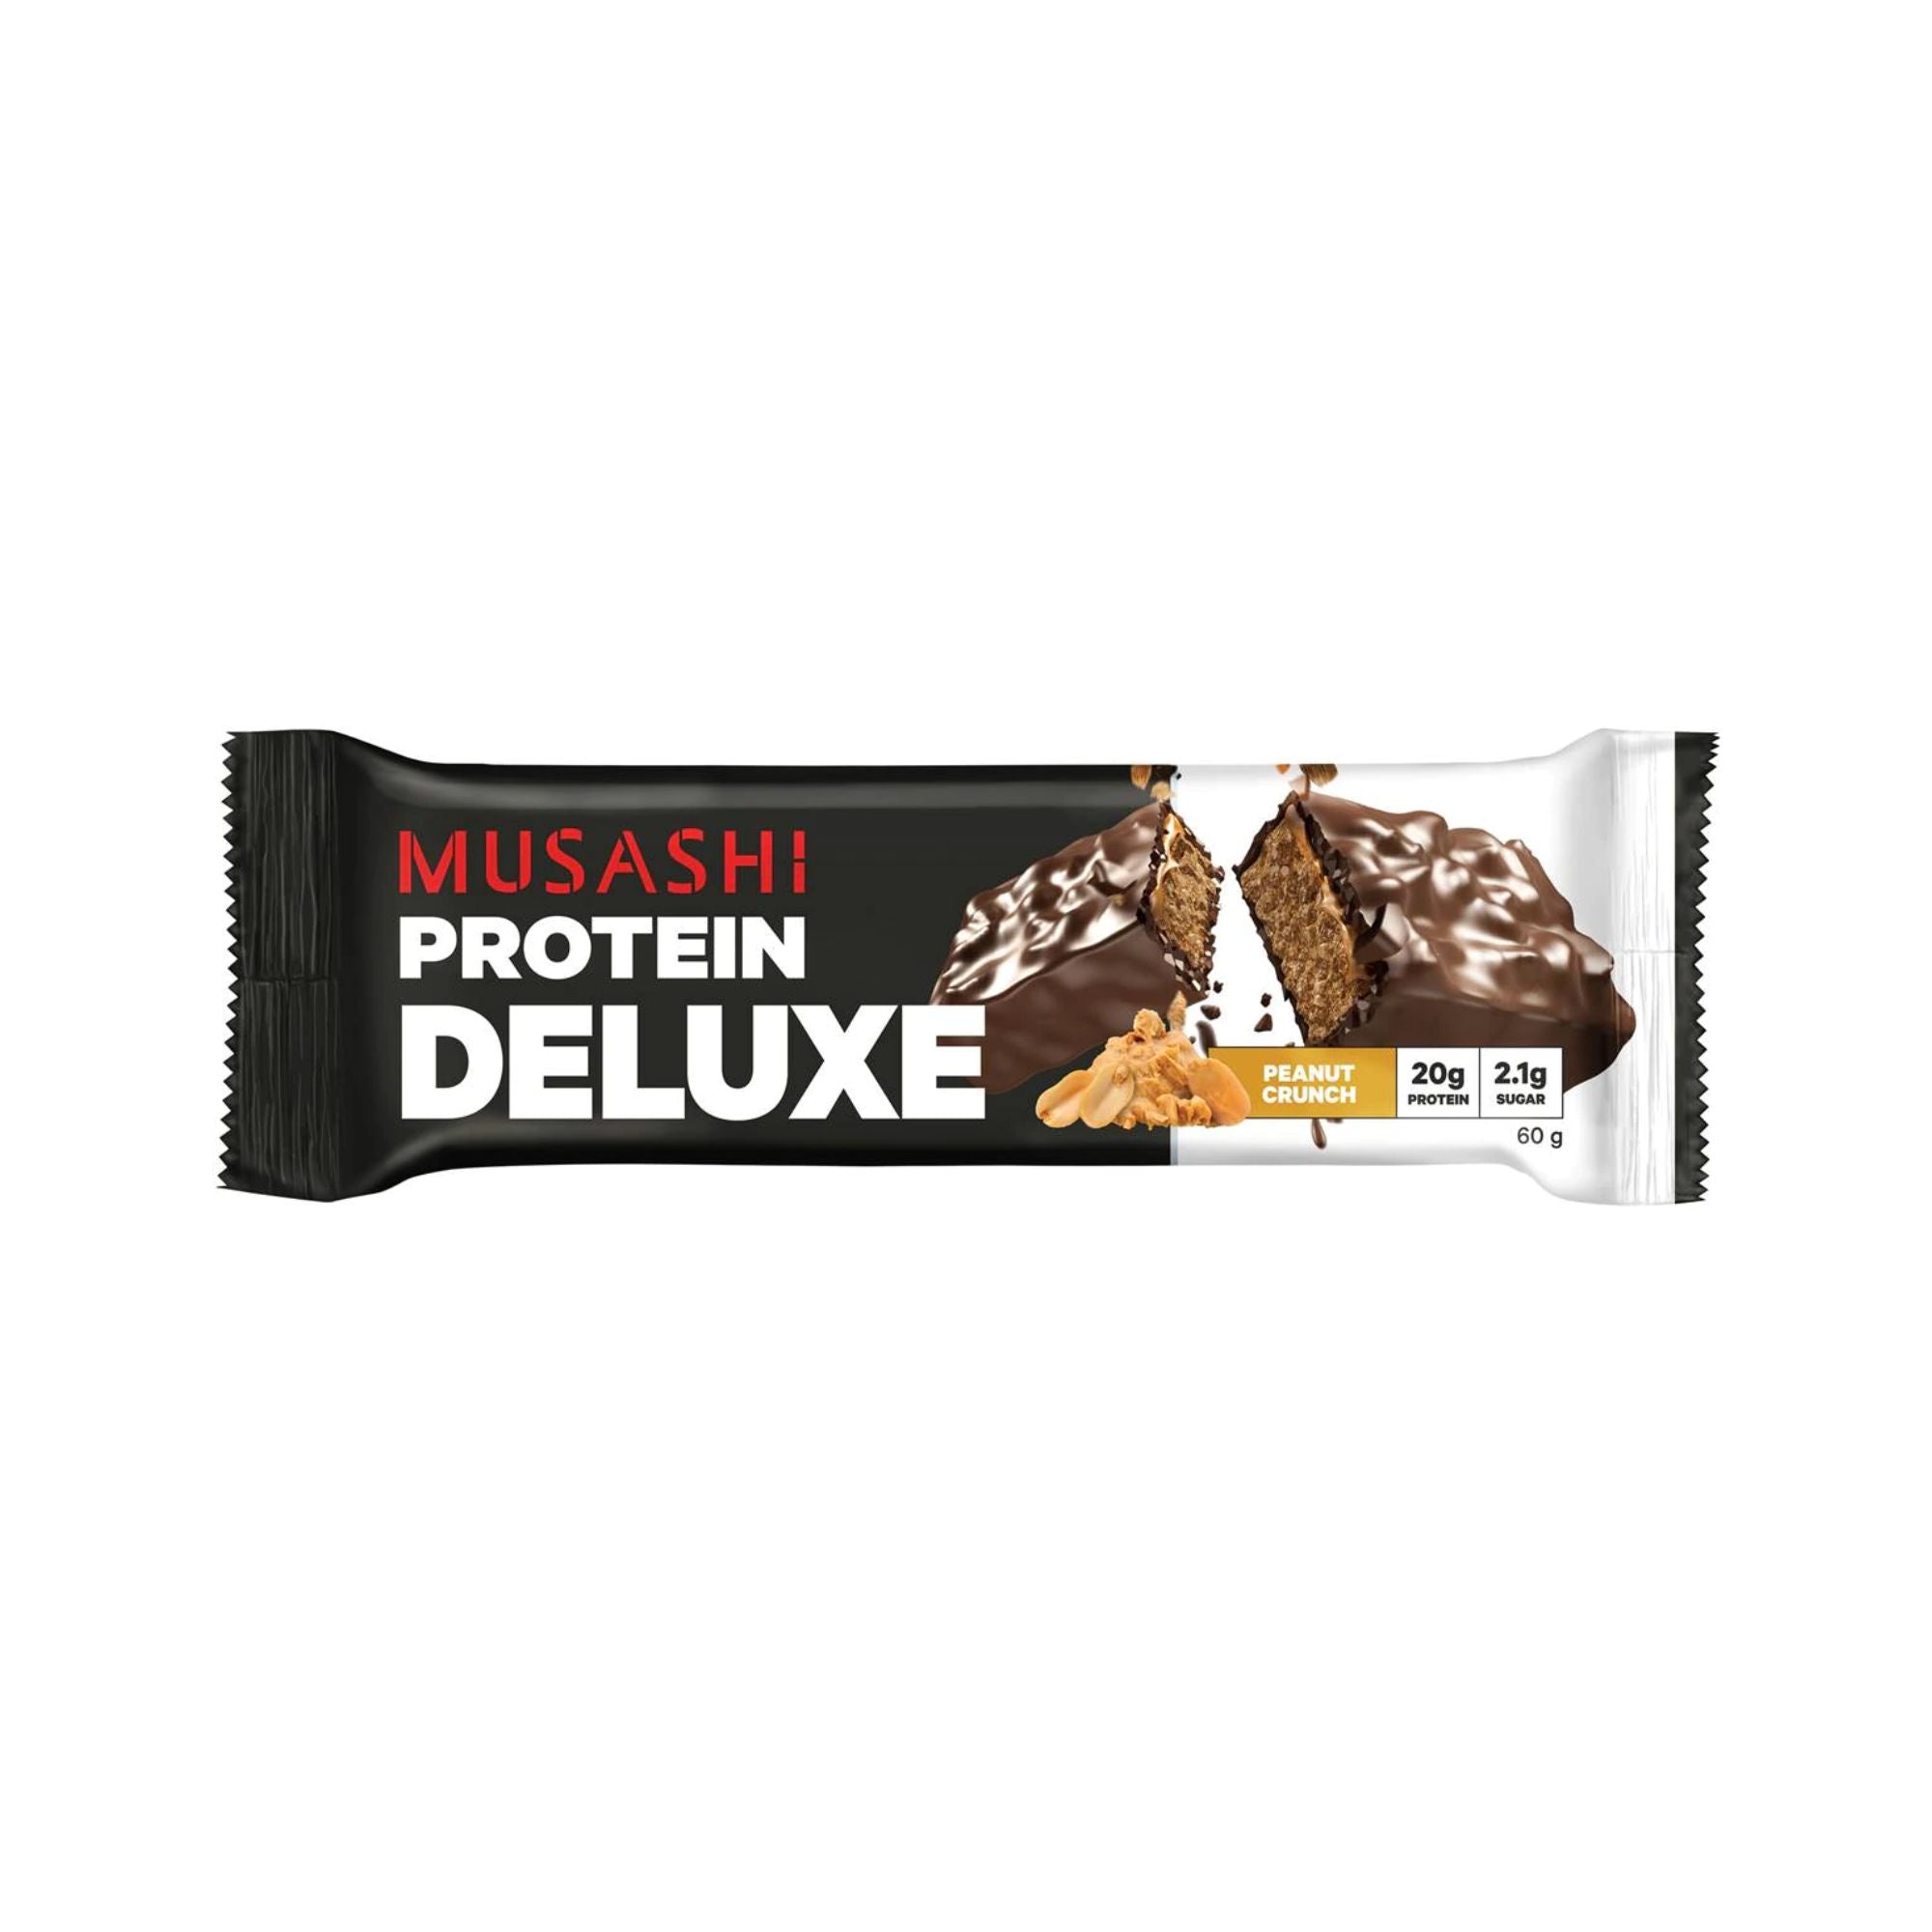 Musashi Protein Deluxe Bar - Peanut Crunch